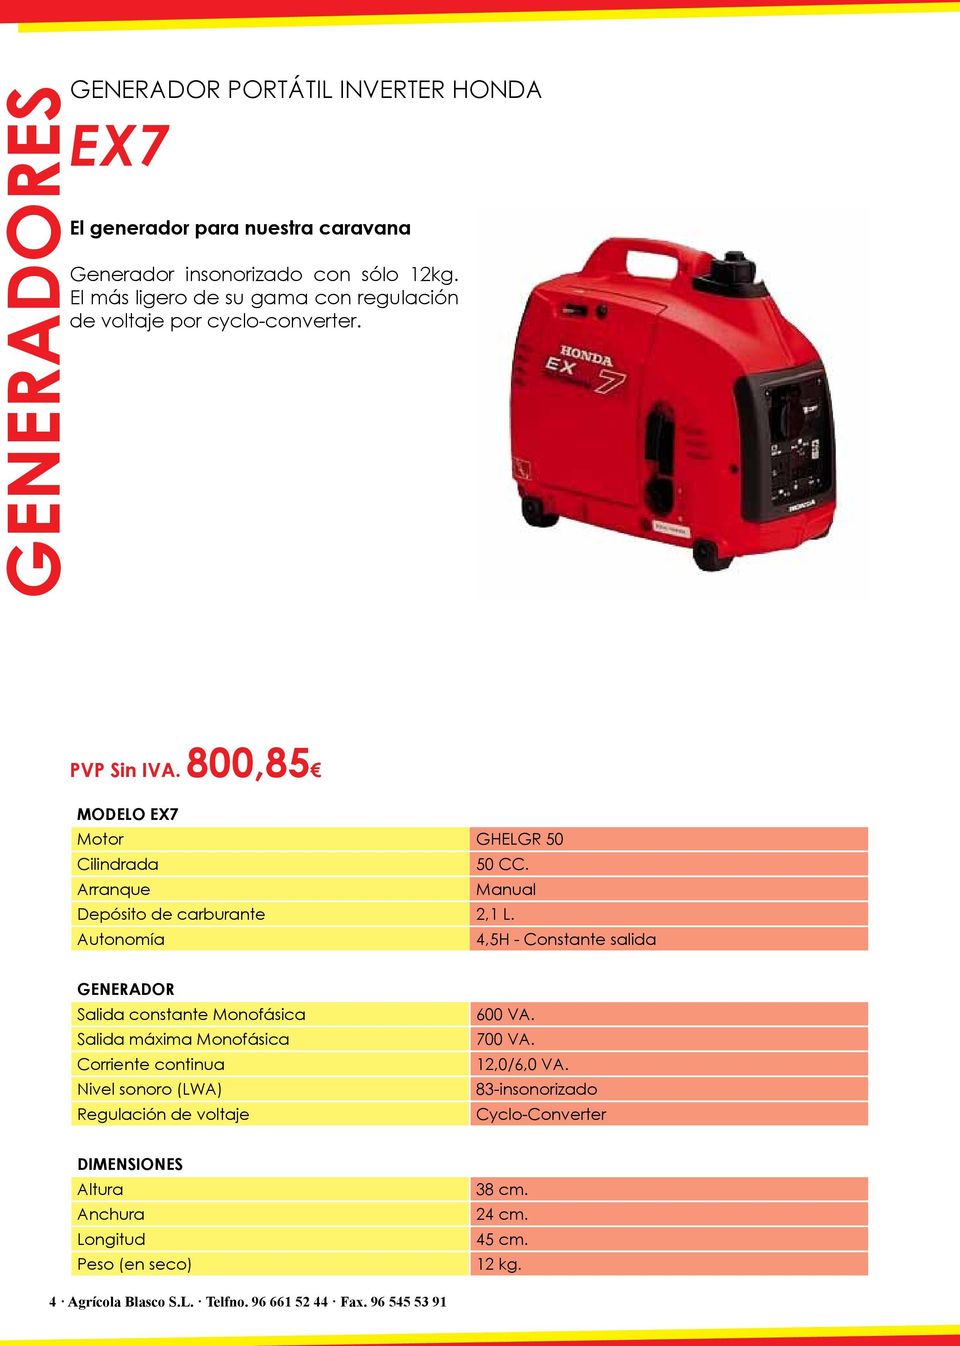 800,85 MODELO EX7 GHELGR 50 50 CC. Manual Depósito de carburante 2,1 L.